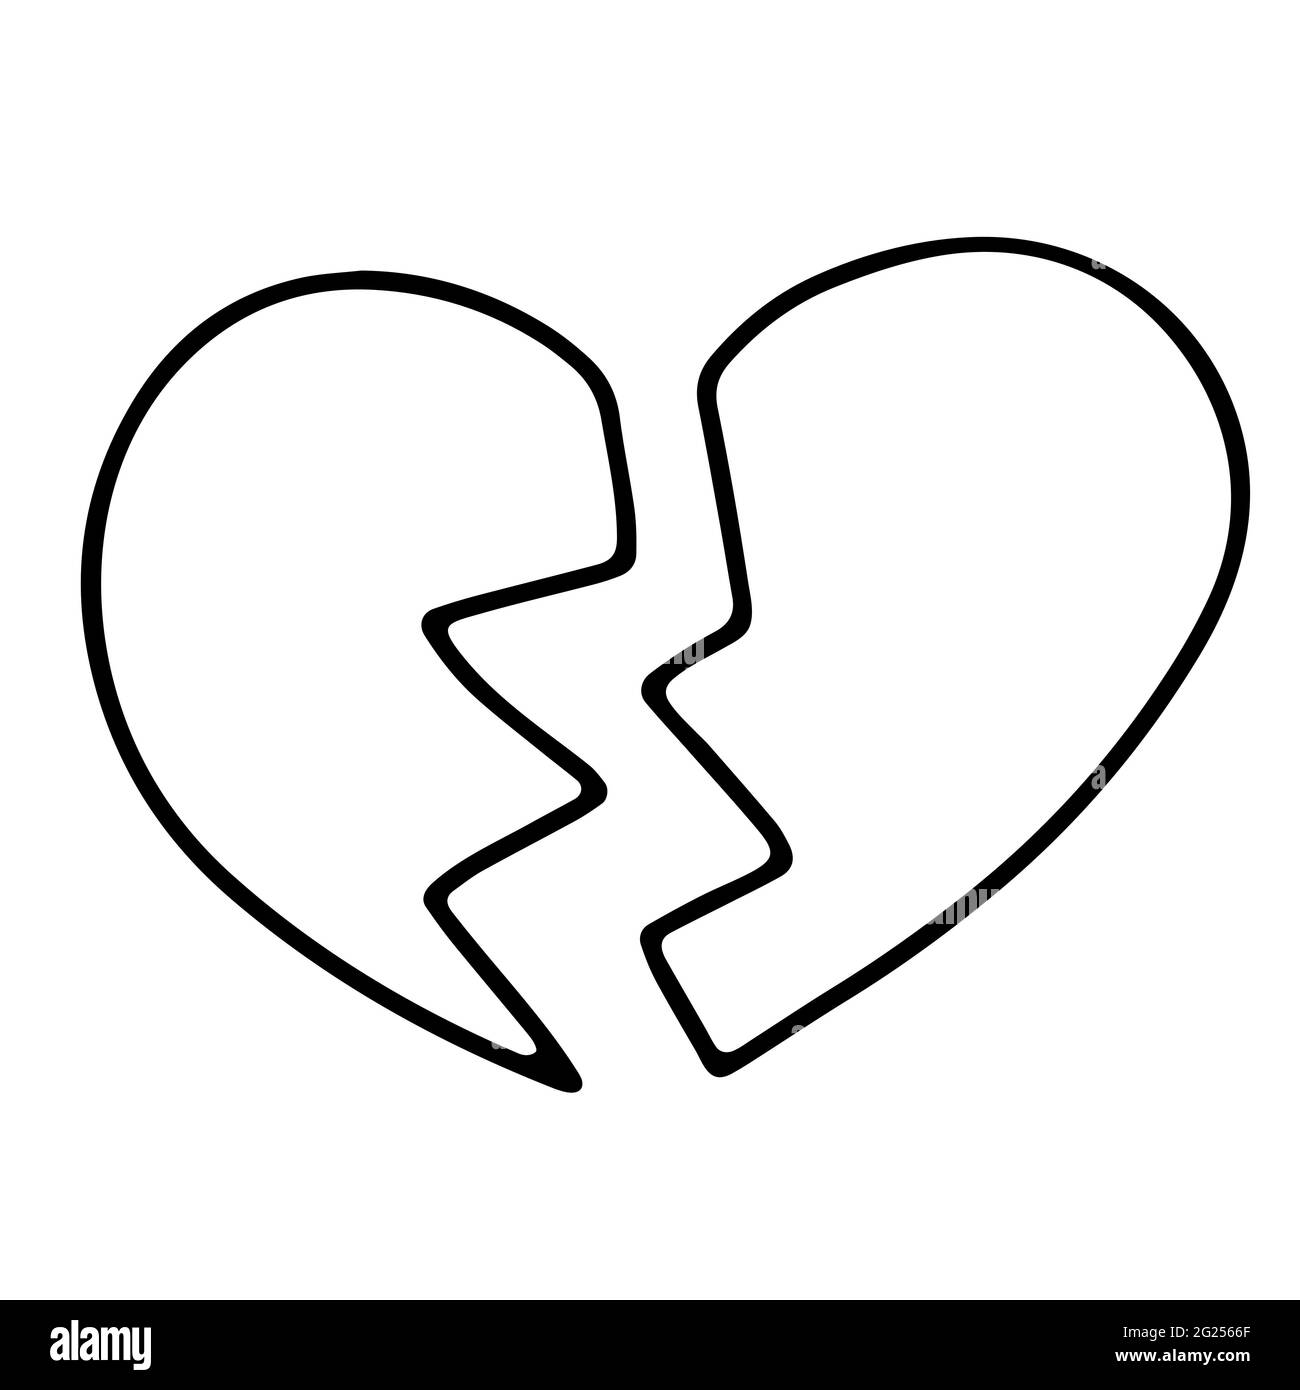 Broken Heart Book: Over 975 Royalty-Free Licensable Stock Illustrations &  Drawings | Shutterstock